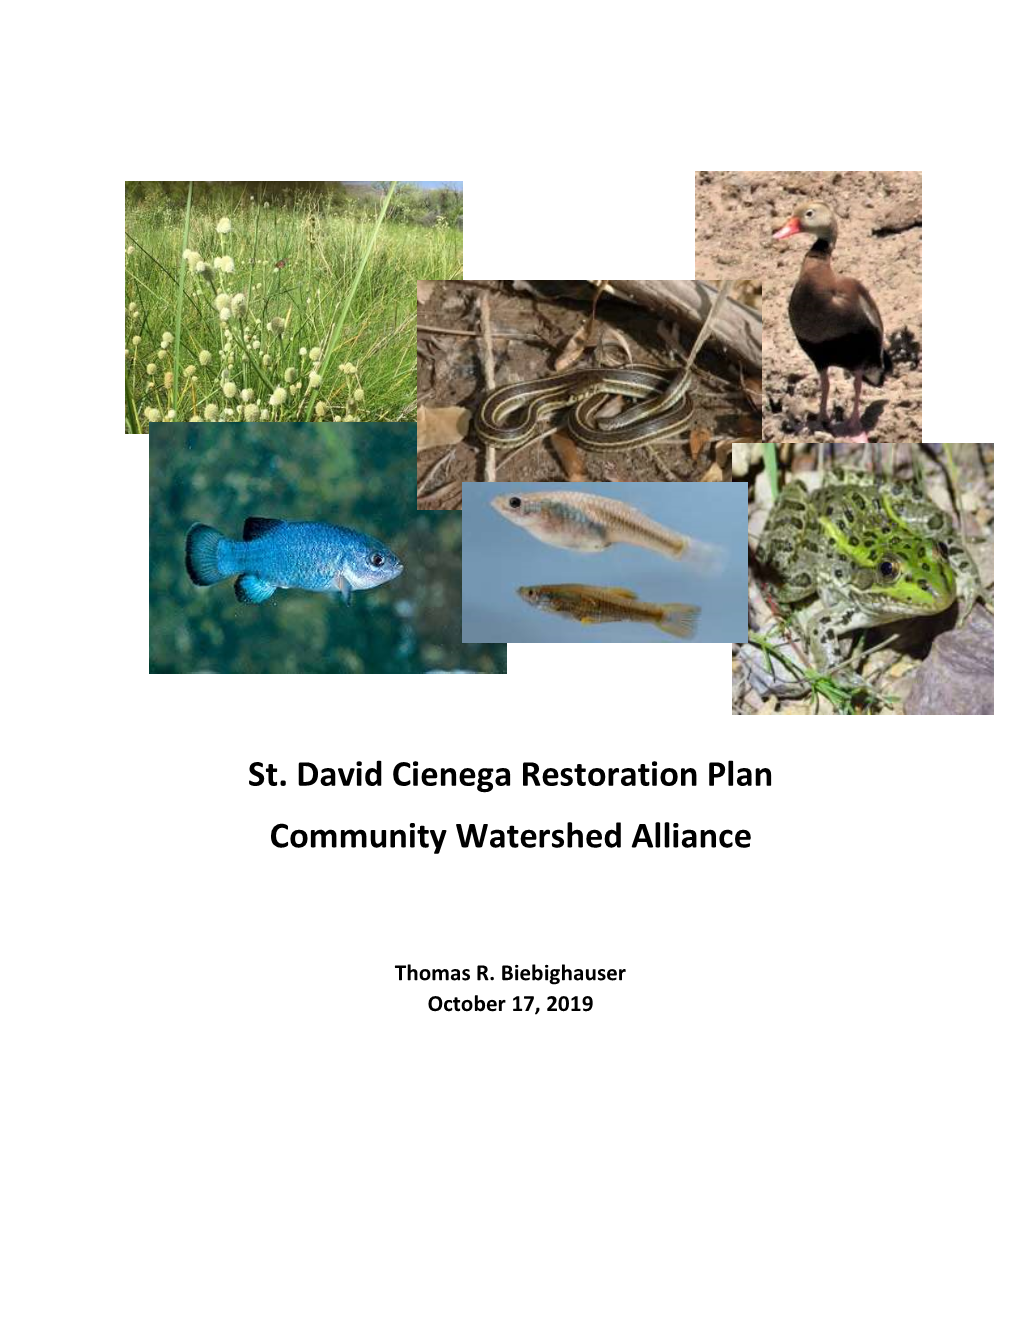 St. David Cienega Restoration Plan Community Watershed Alliance